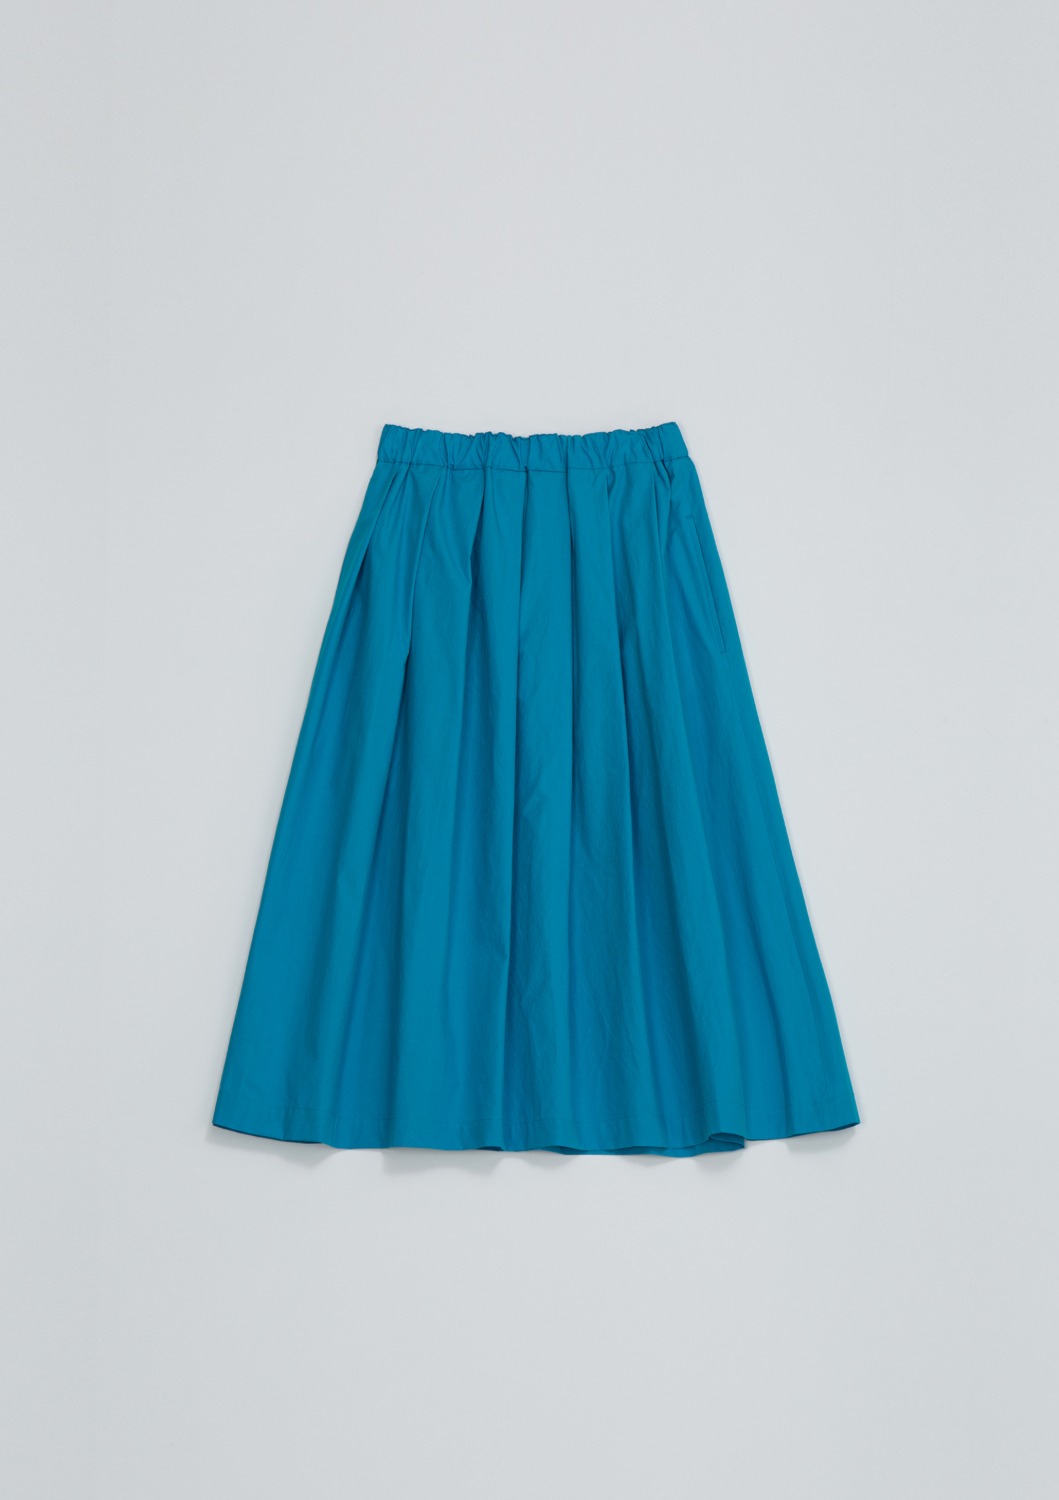 Layla Skirt - Aqua Blue Cotton